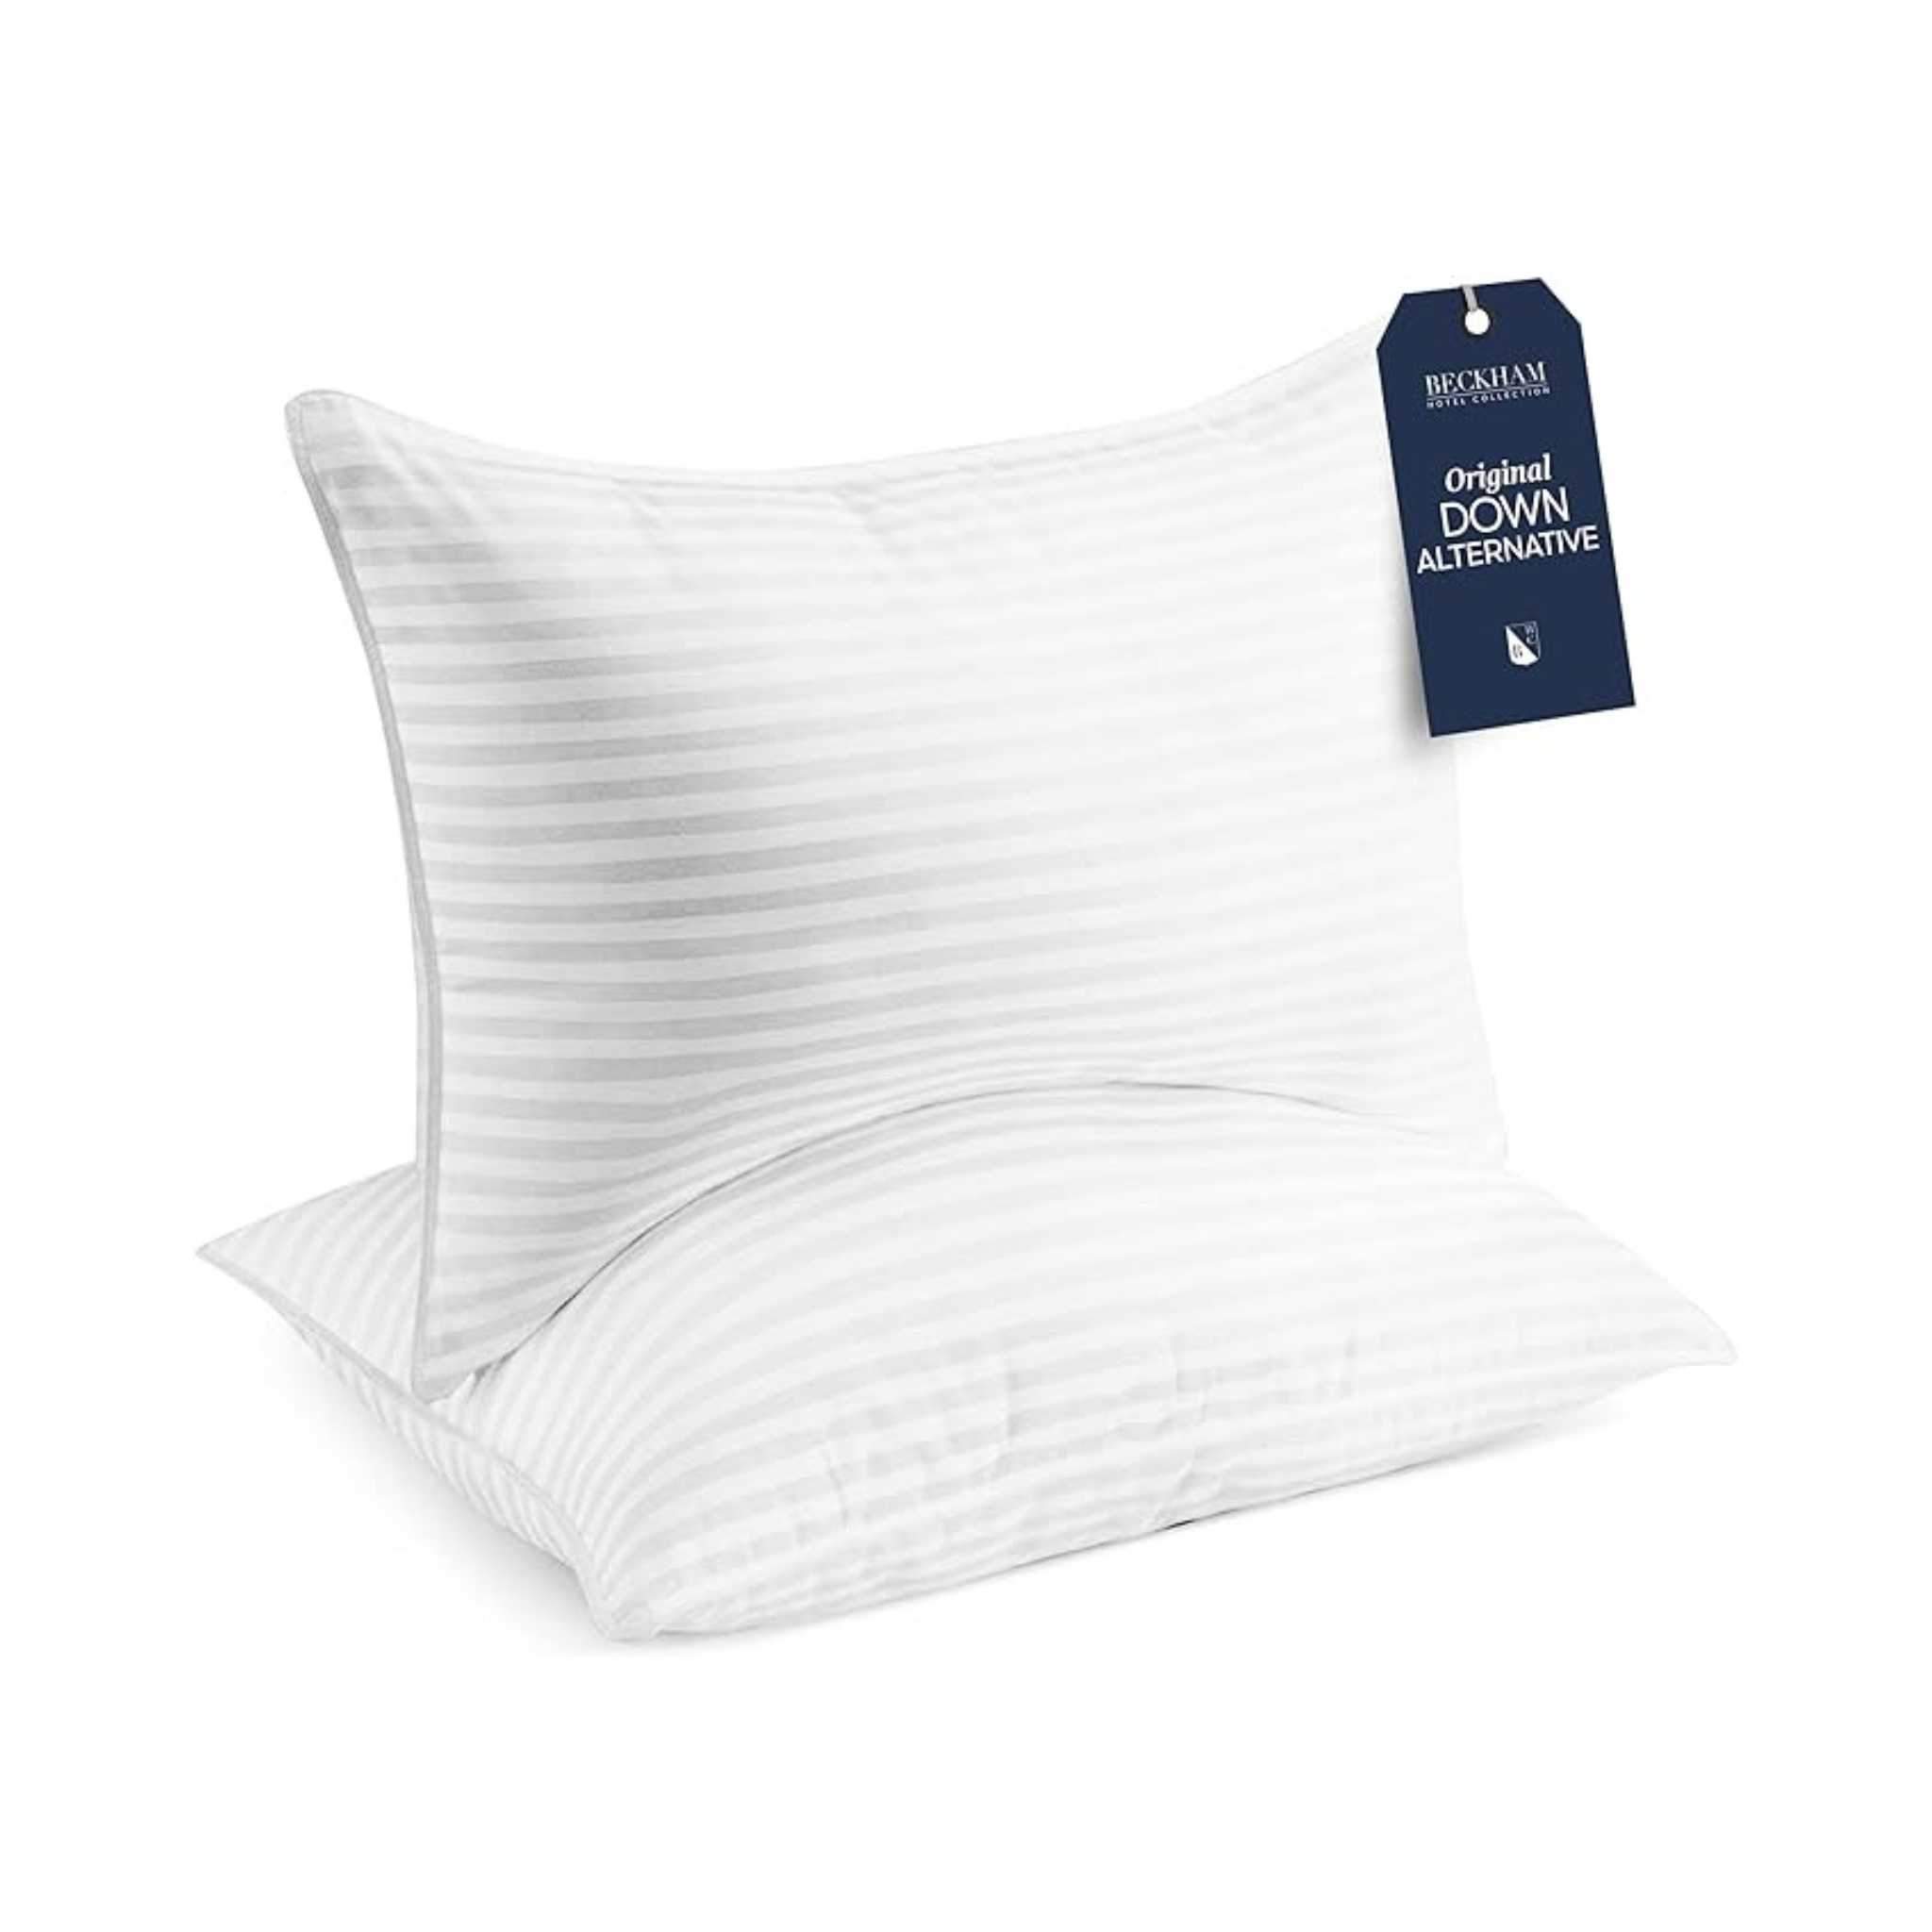 2 Beckham Hotel Collection Down Alternative Cooling Pillows